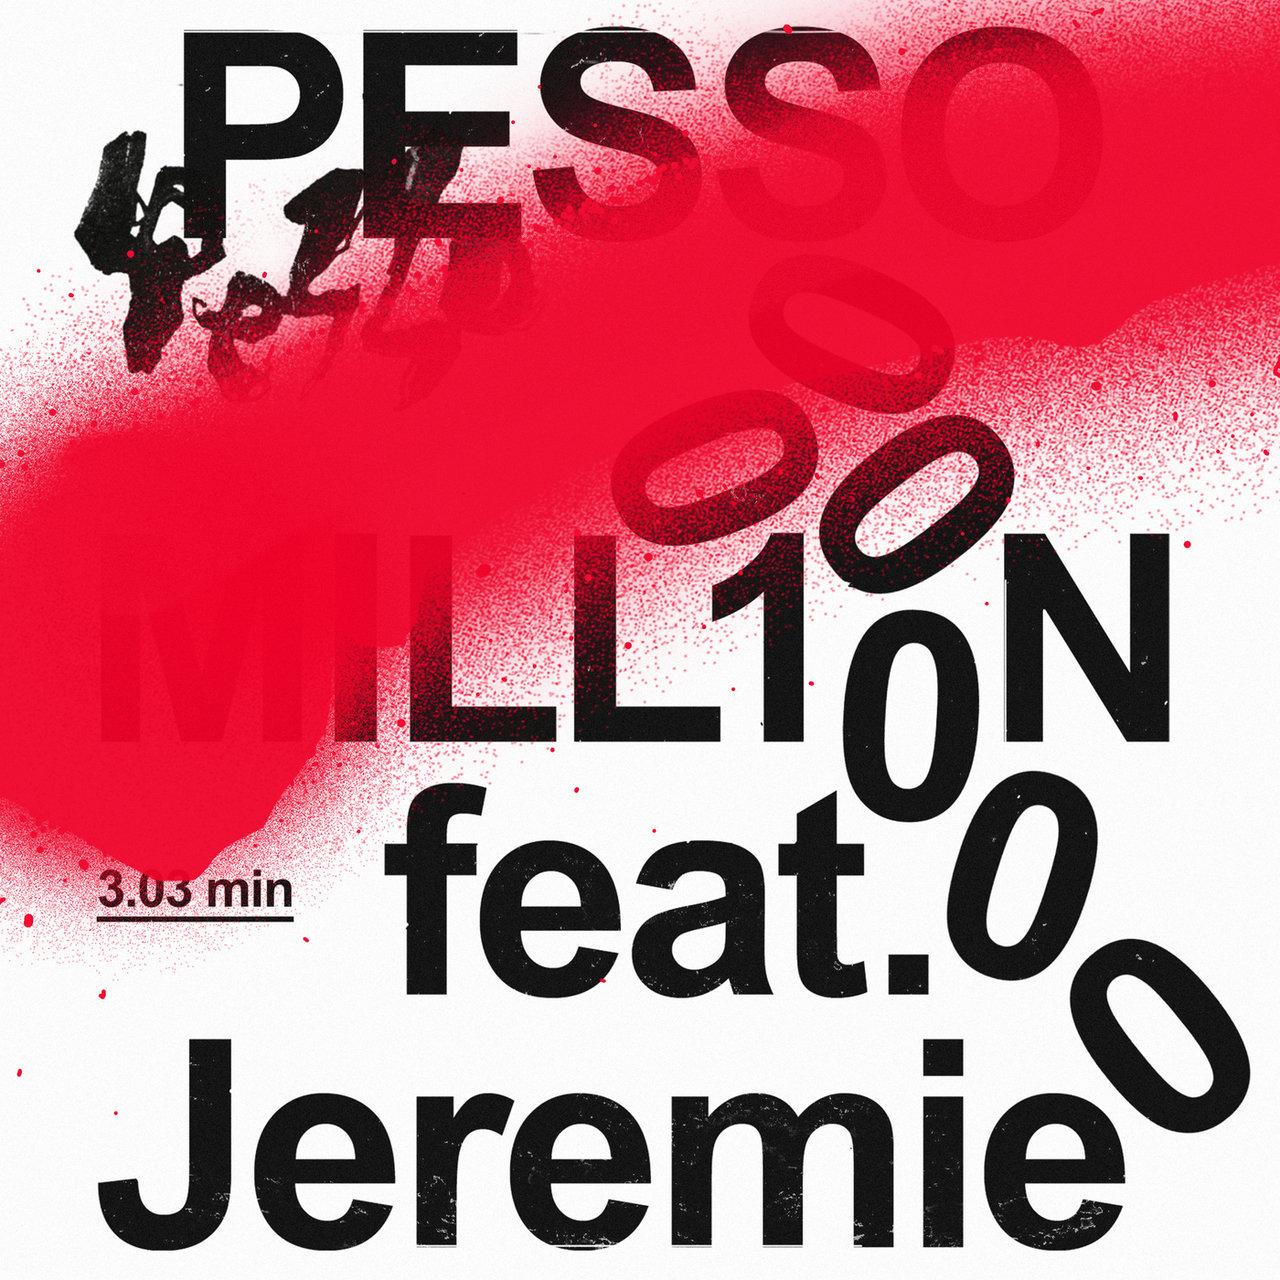 Pesso – MILL10N (feat. Jeremie)